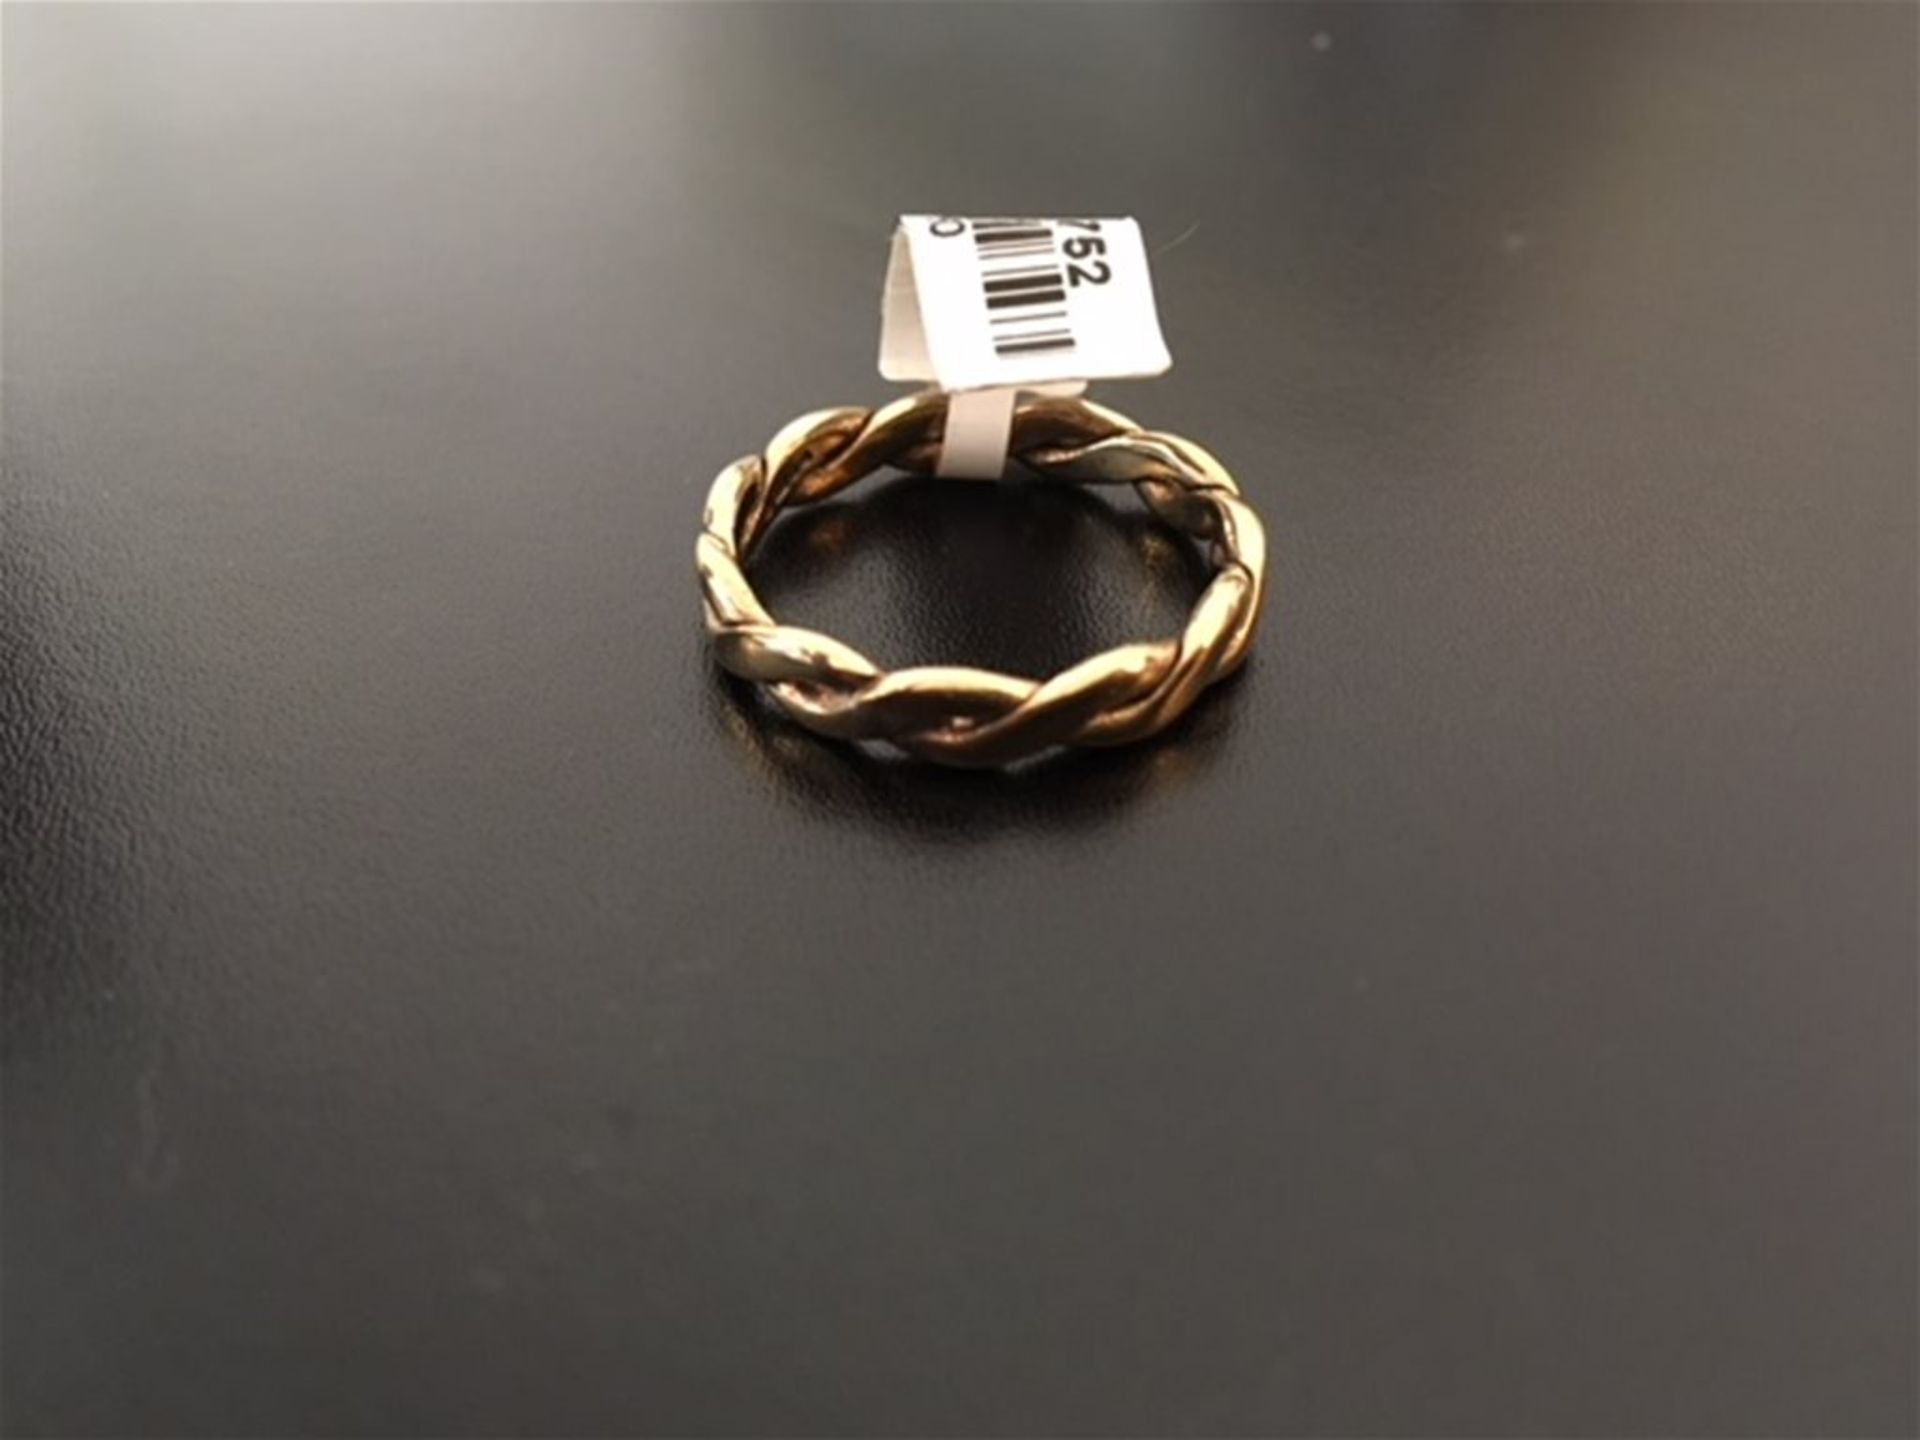 Gold wedding ring - Image 2 of 2